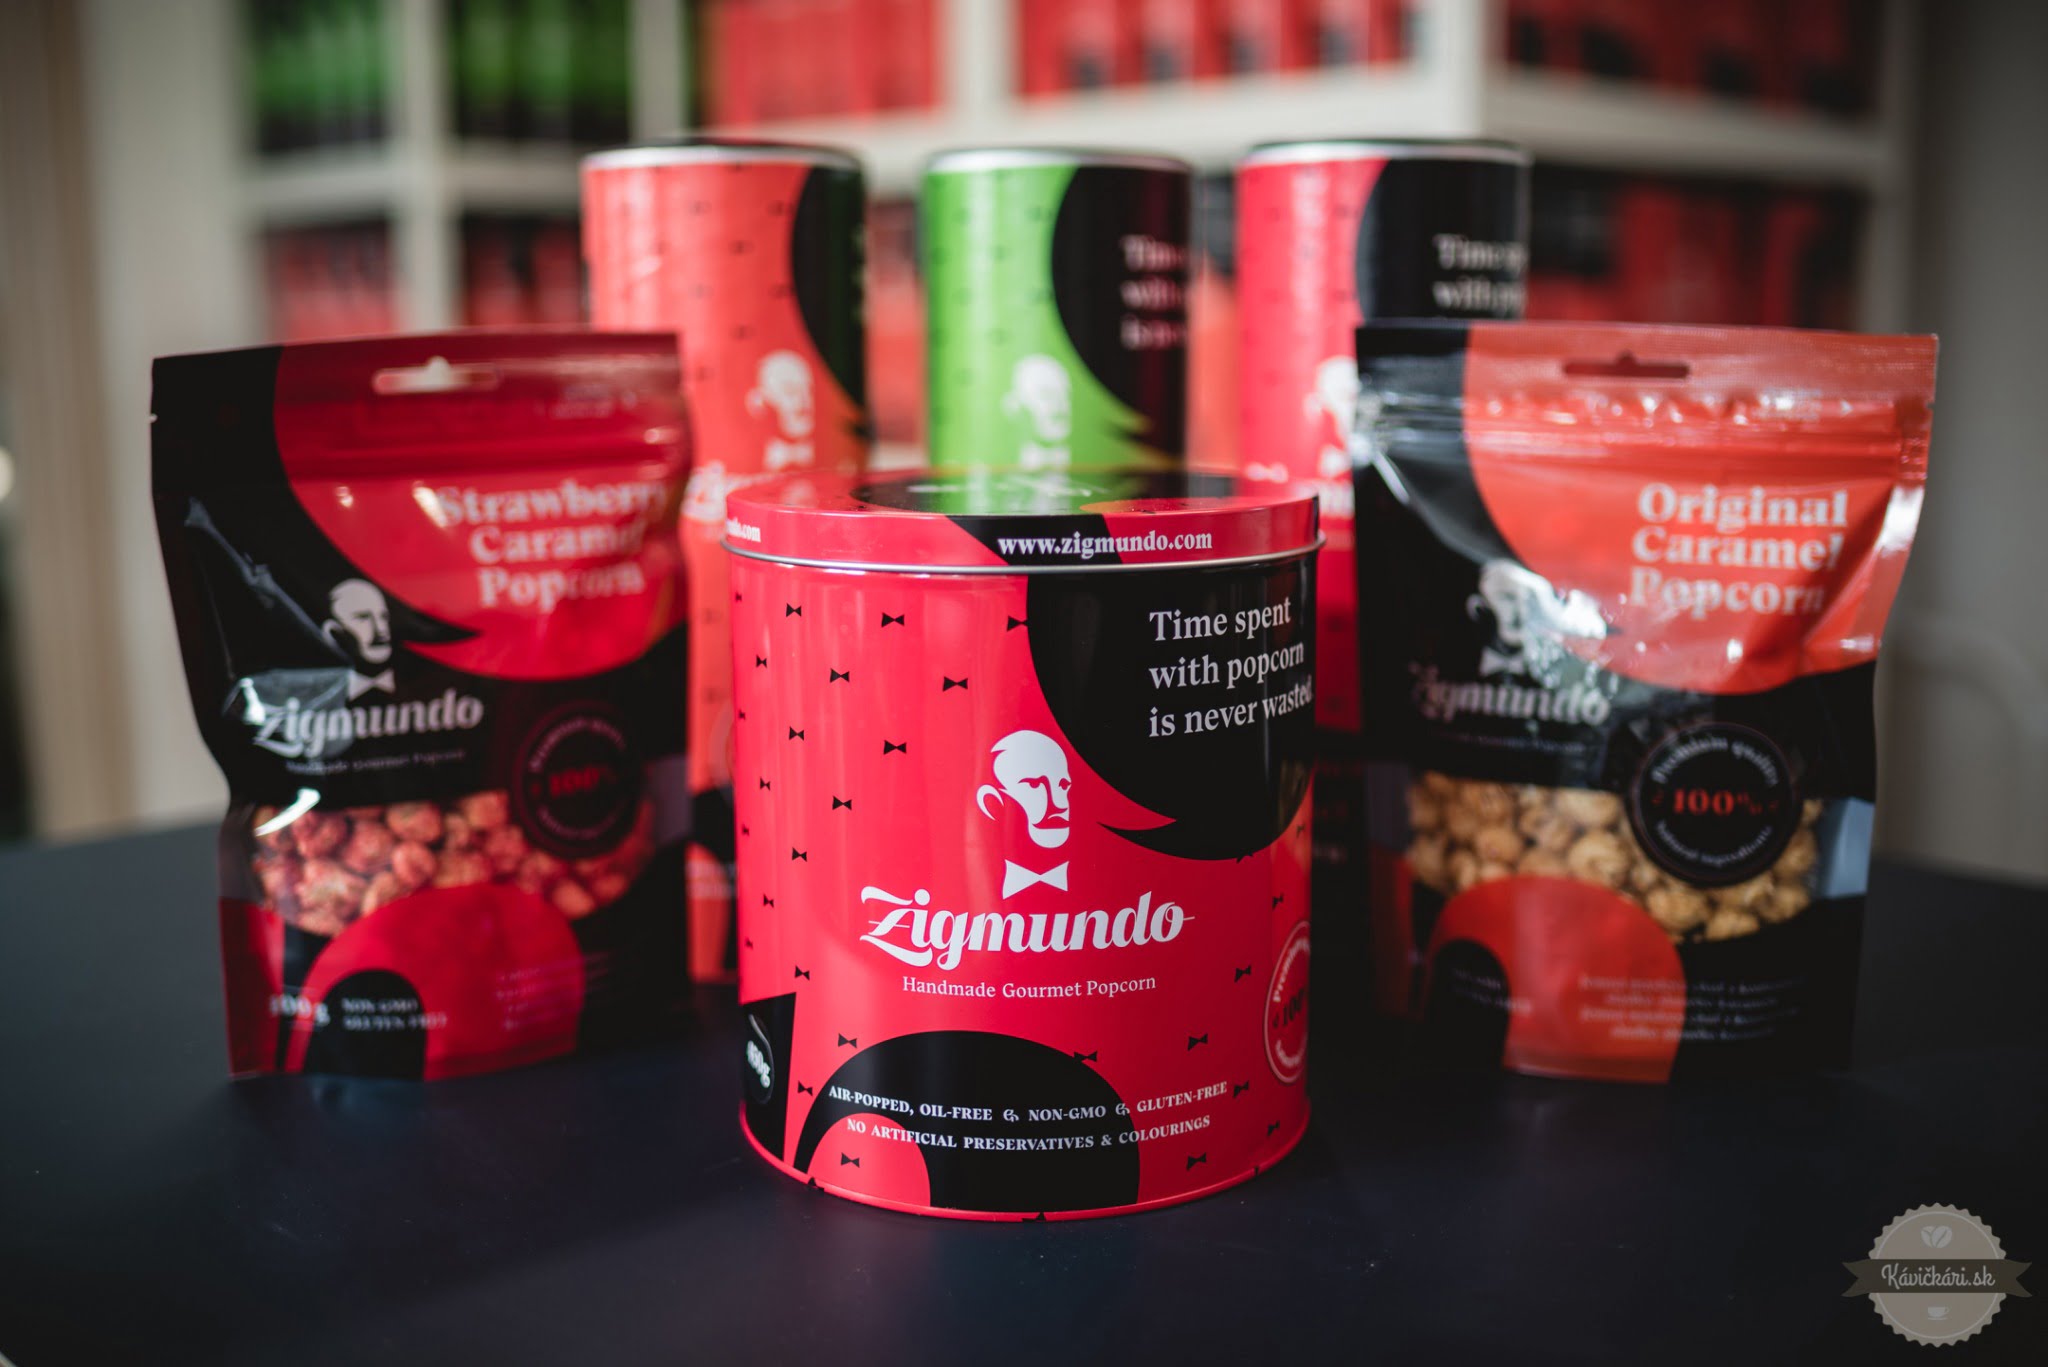 Zigmundo handmade gourmet popcorn